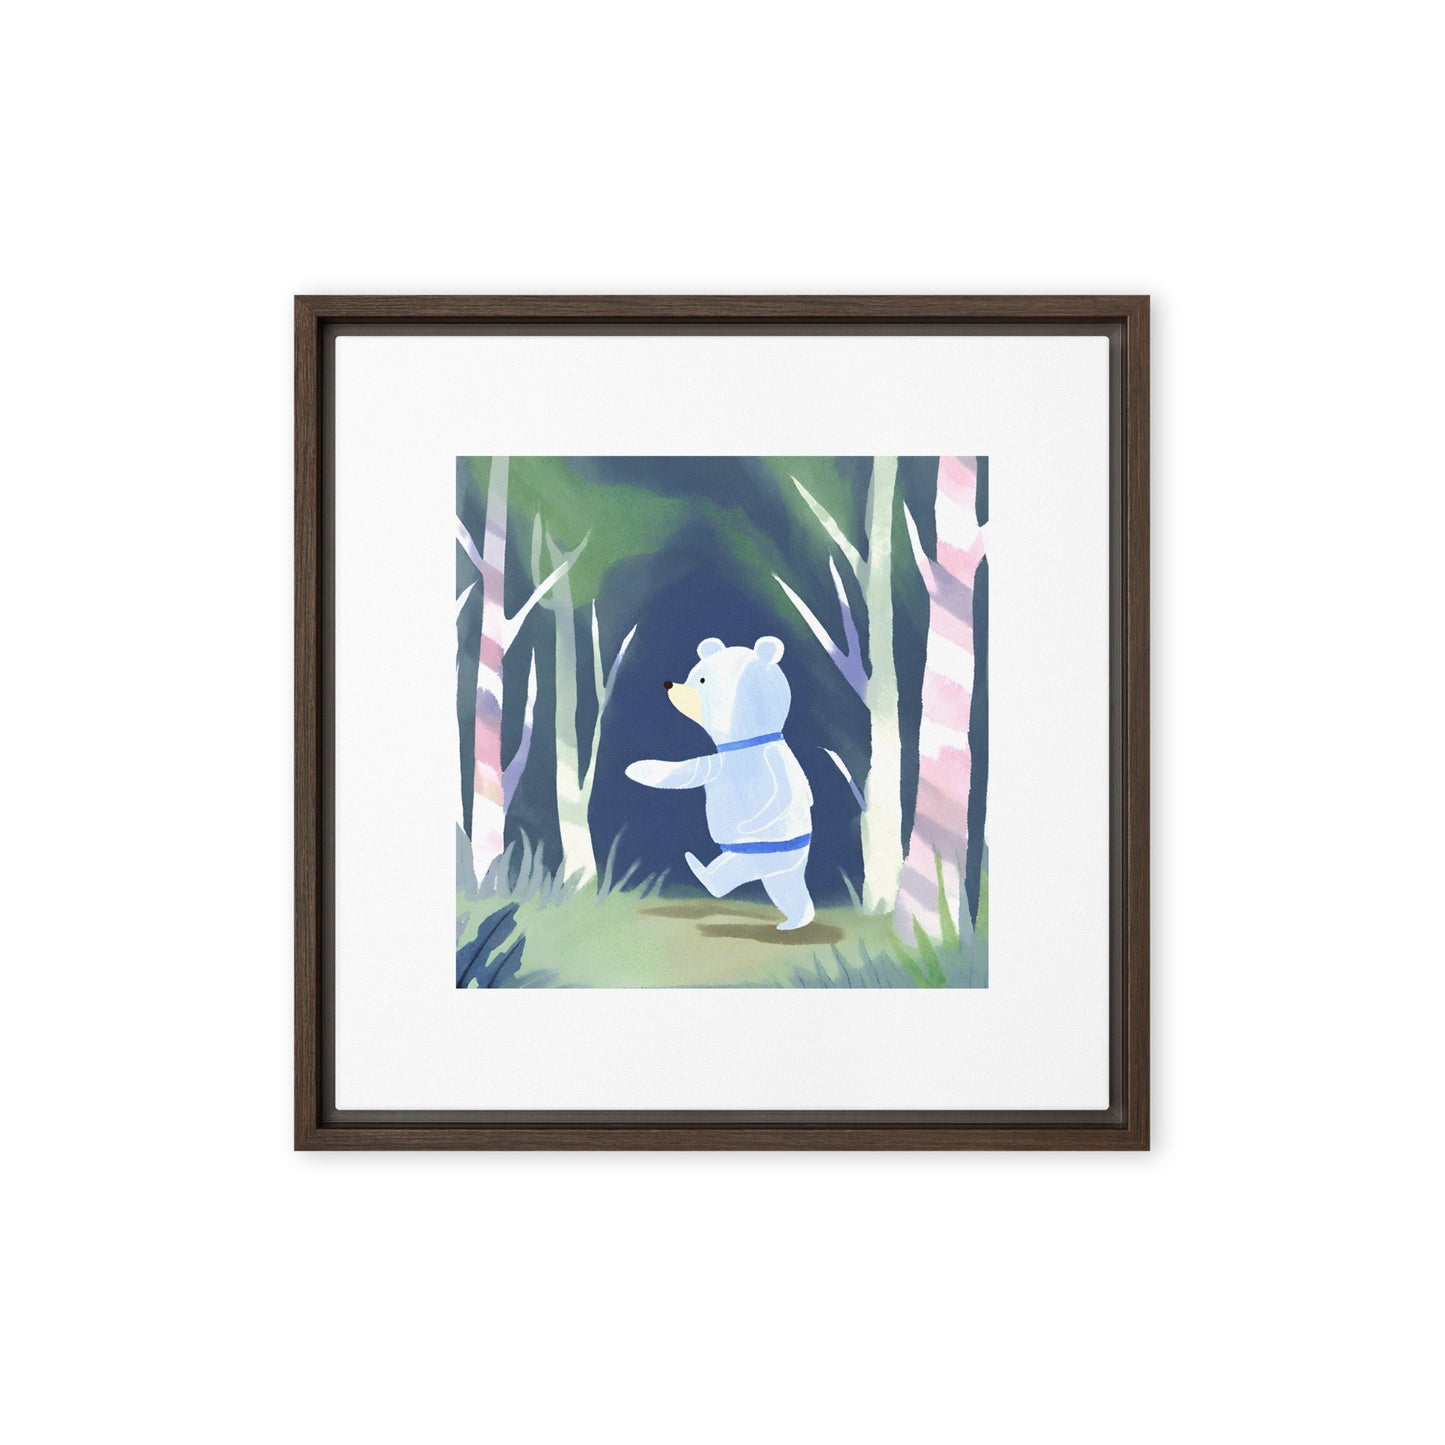 The sleepwalking bear - Framed canvas